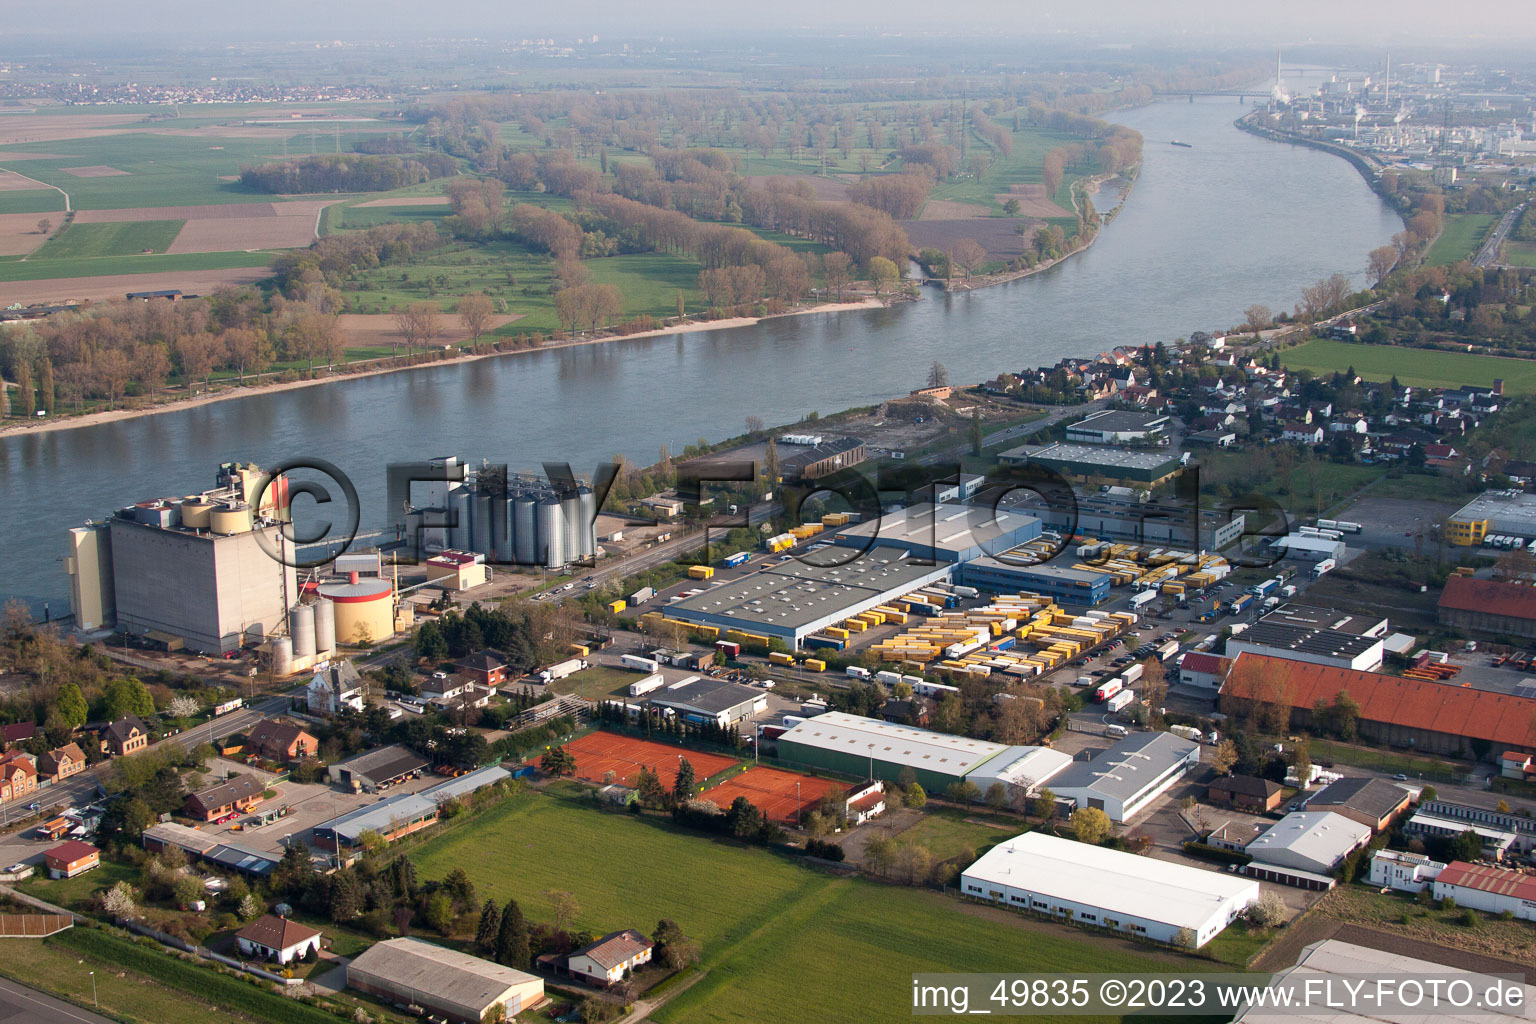 Drone image of District Rheindürkheim in Worms in the state Rhineland-Palatinate, Germany